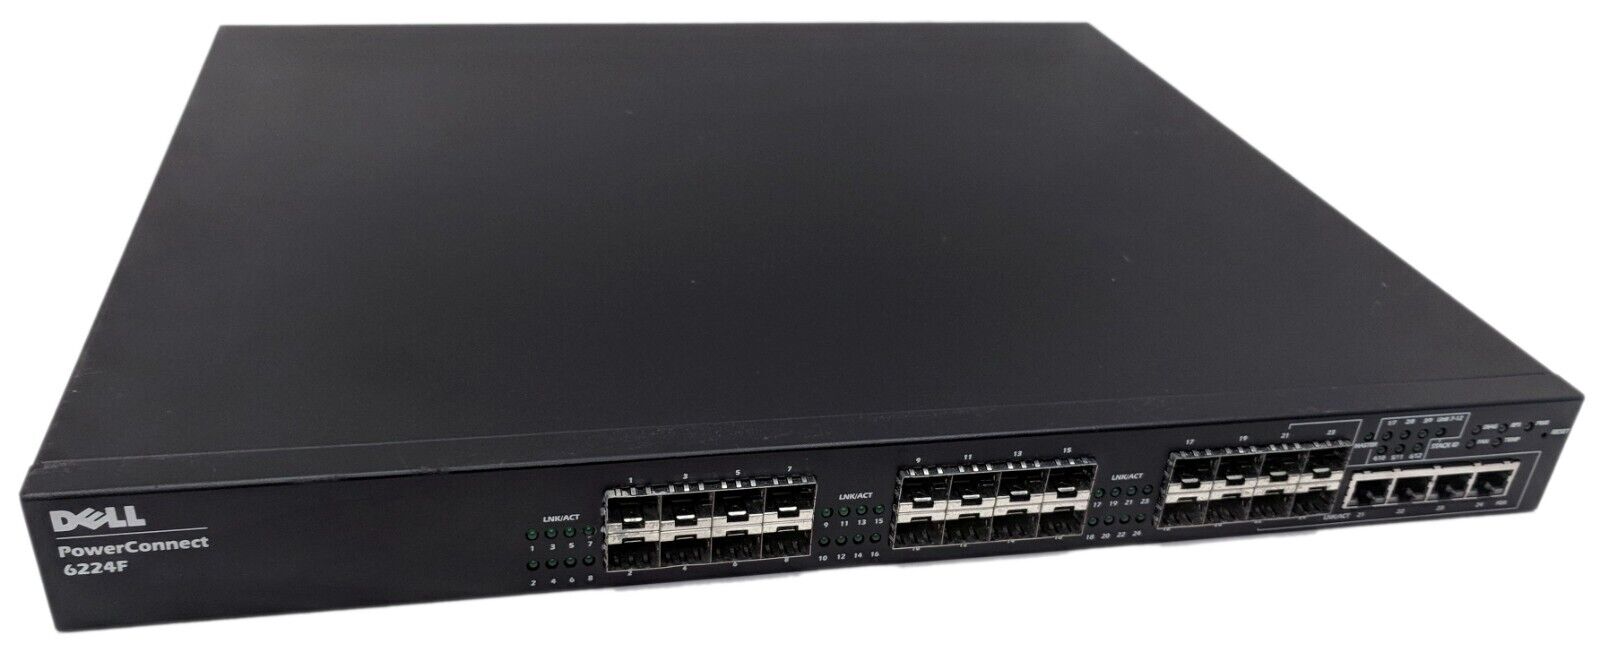 Dell PowerConnect 6224F 24-Port SFP Gigabit Network Fiber Ethernet Switch TESTED